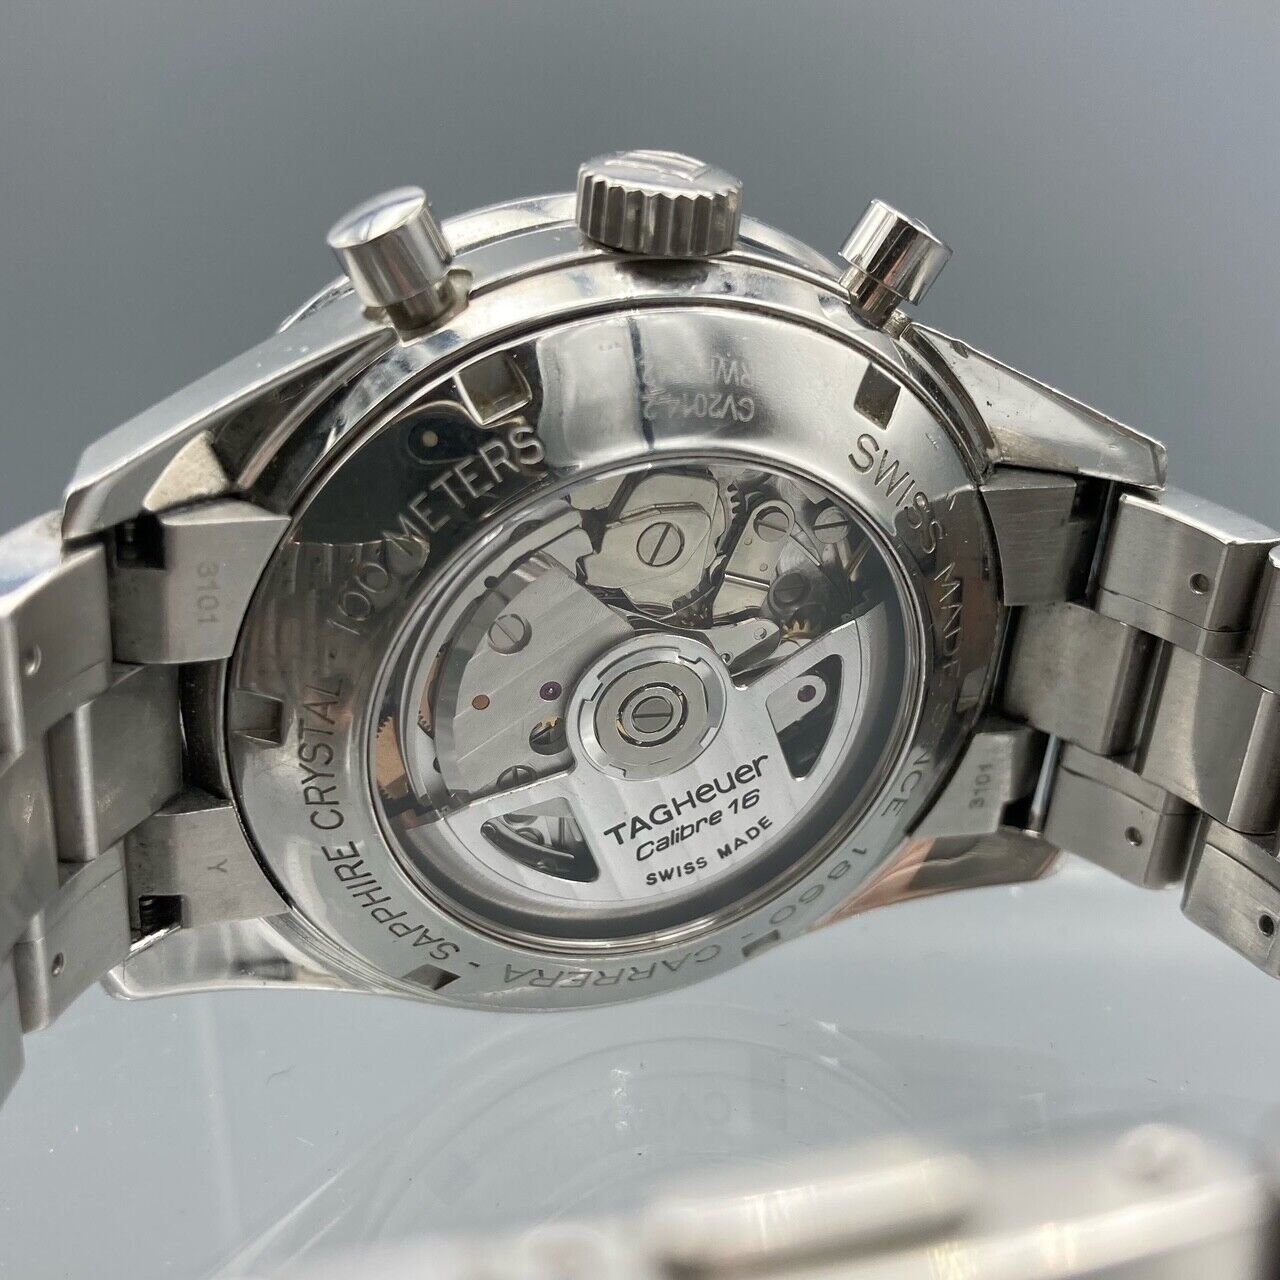 TAG Heuer Carrera Chronograph Black Dial Skeleton Back Watch - CV2014-2